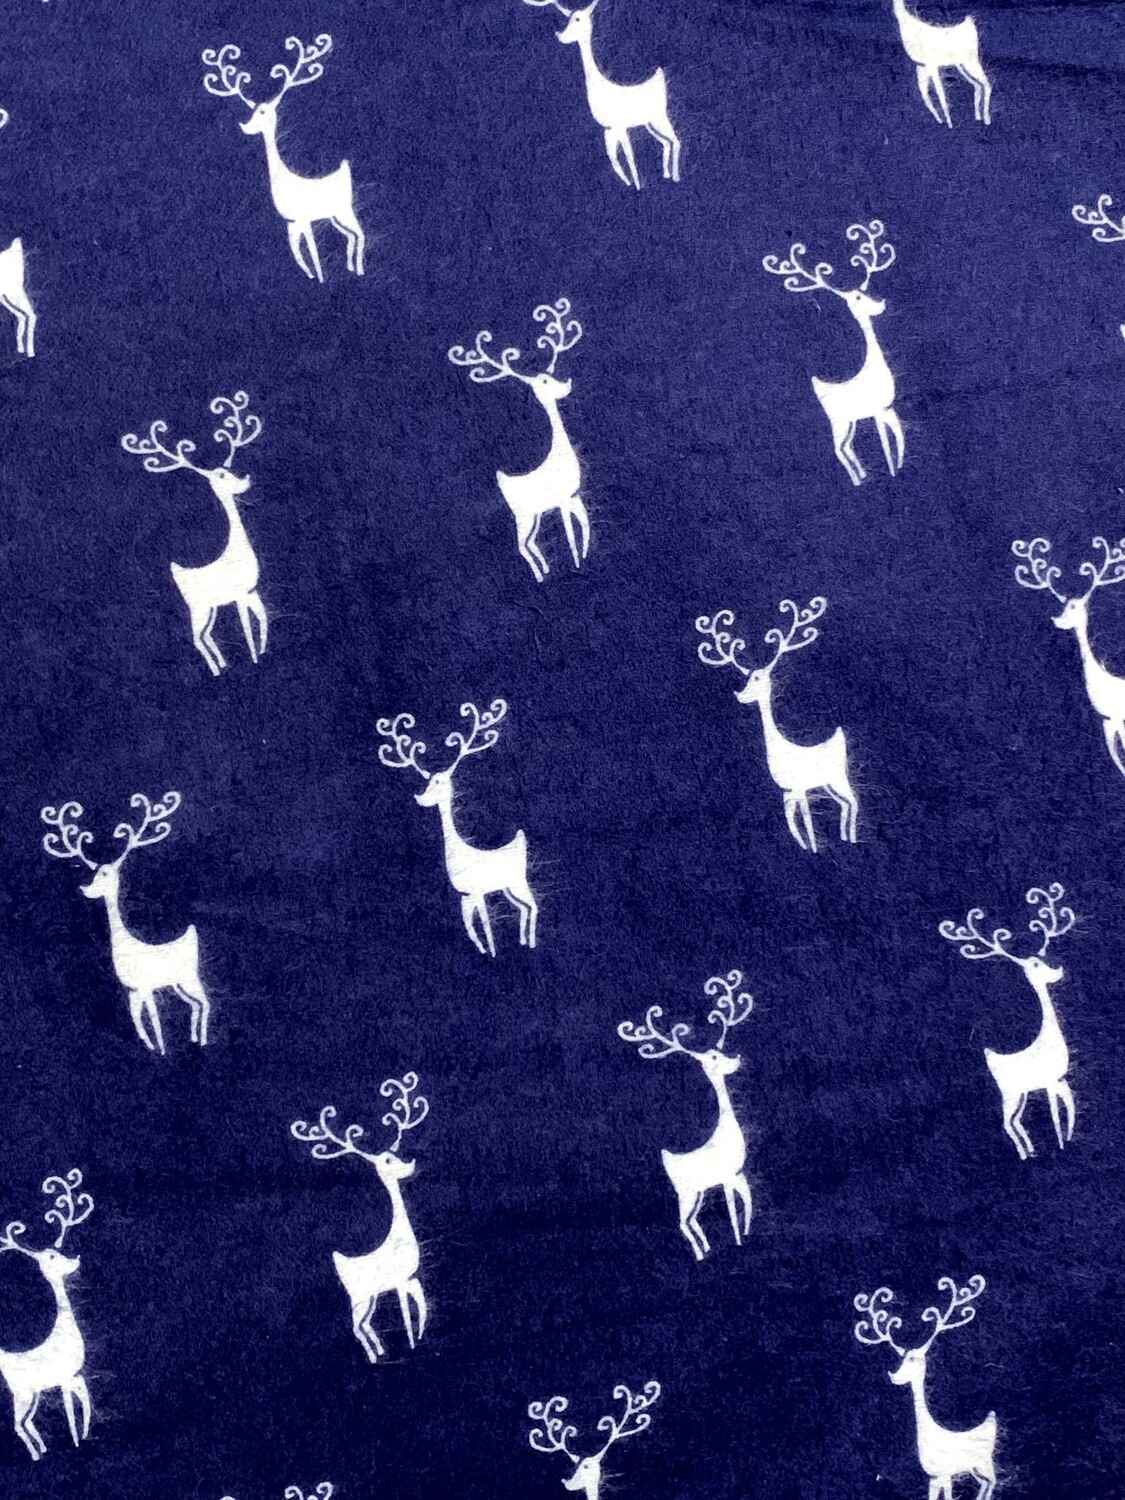 Deers | Cotton Flannelette | 145cm wide - 0.95m Piece